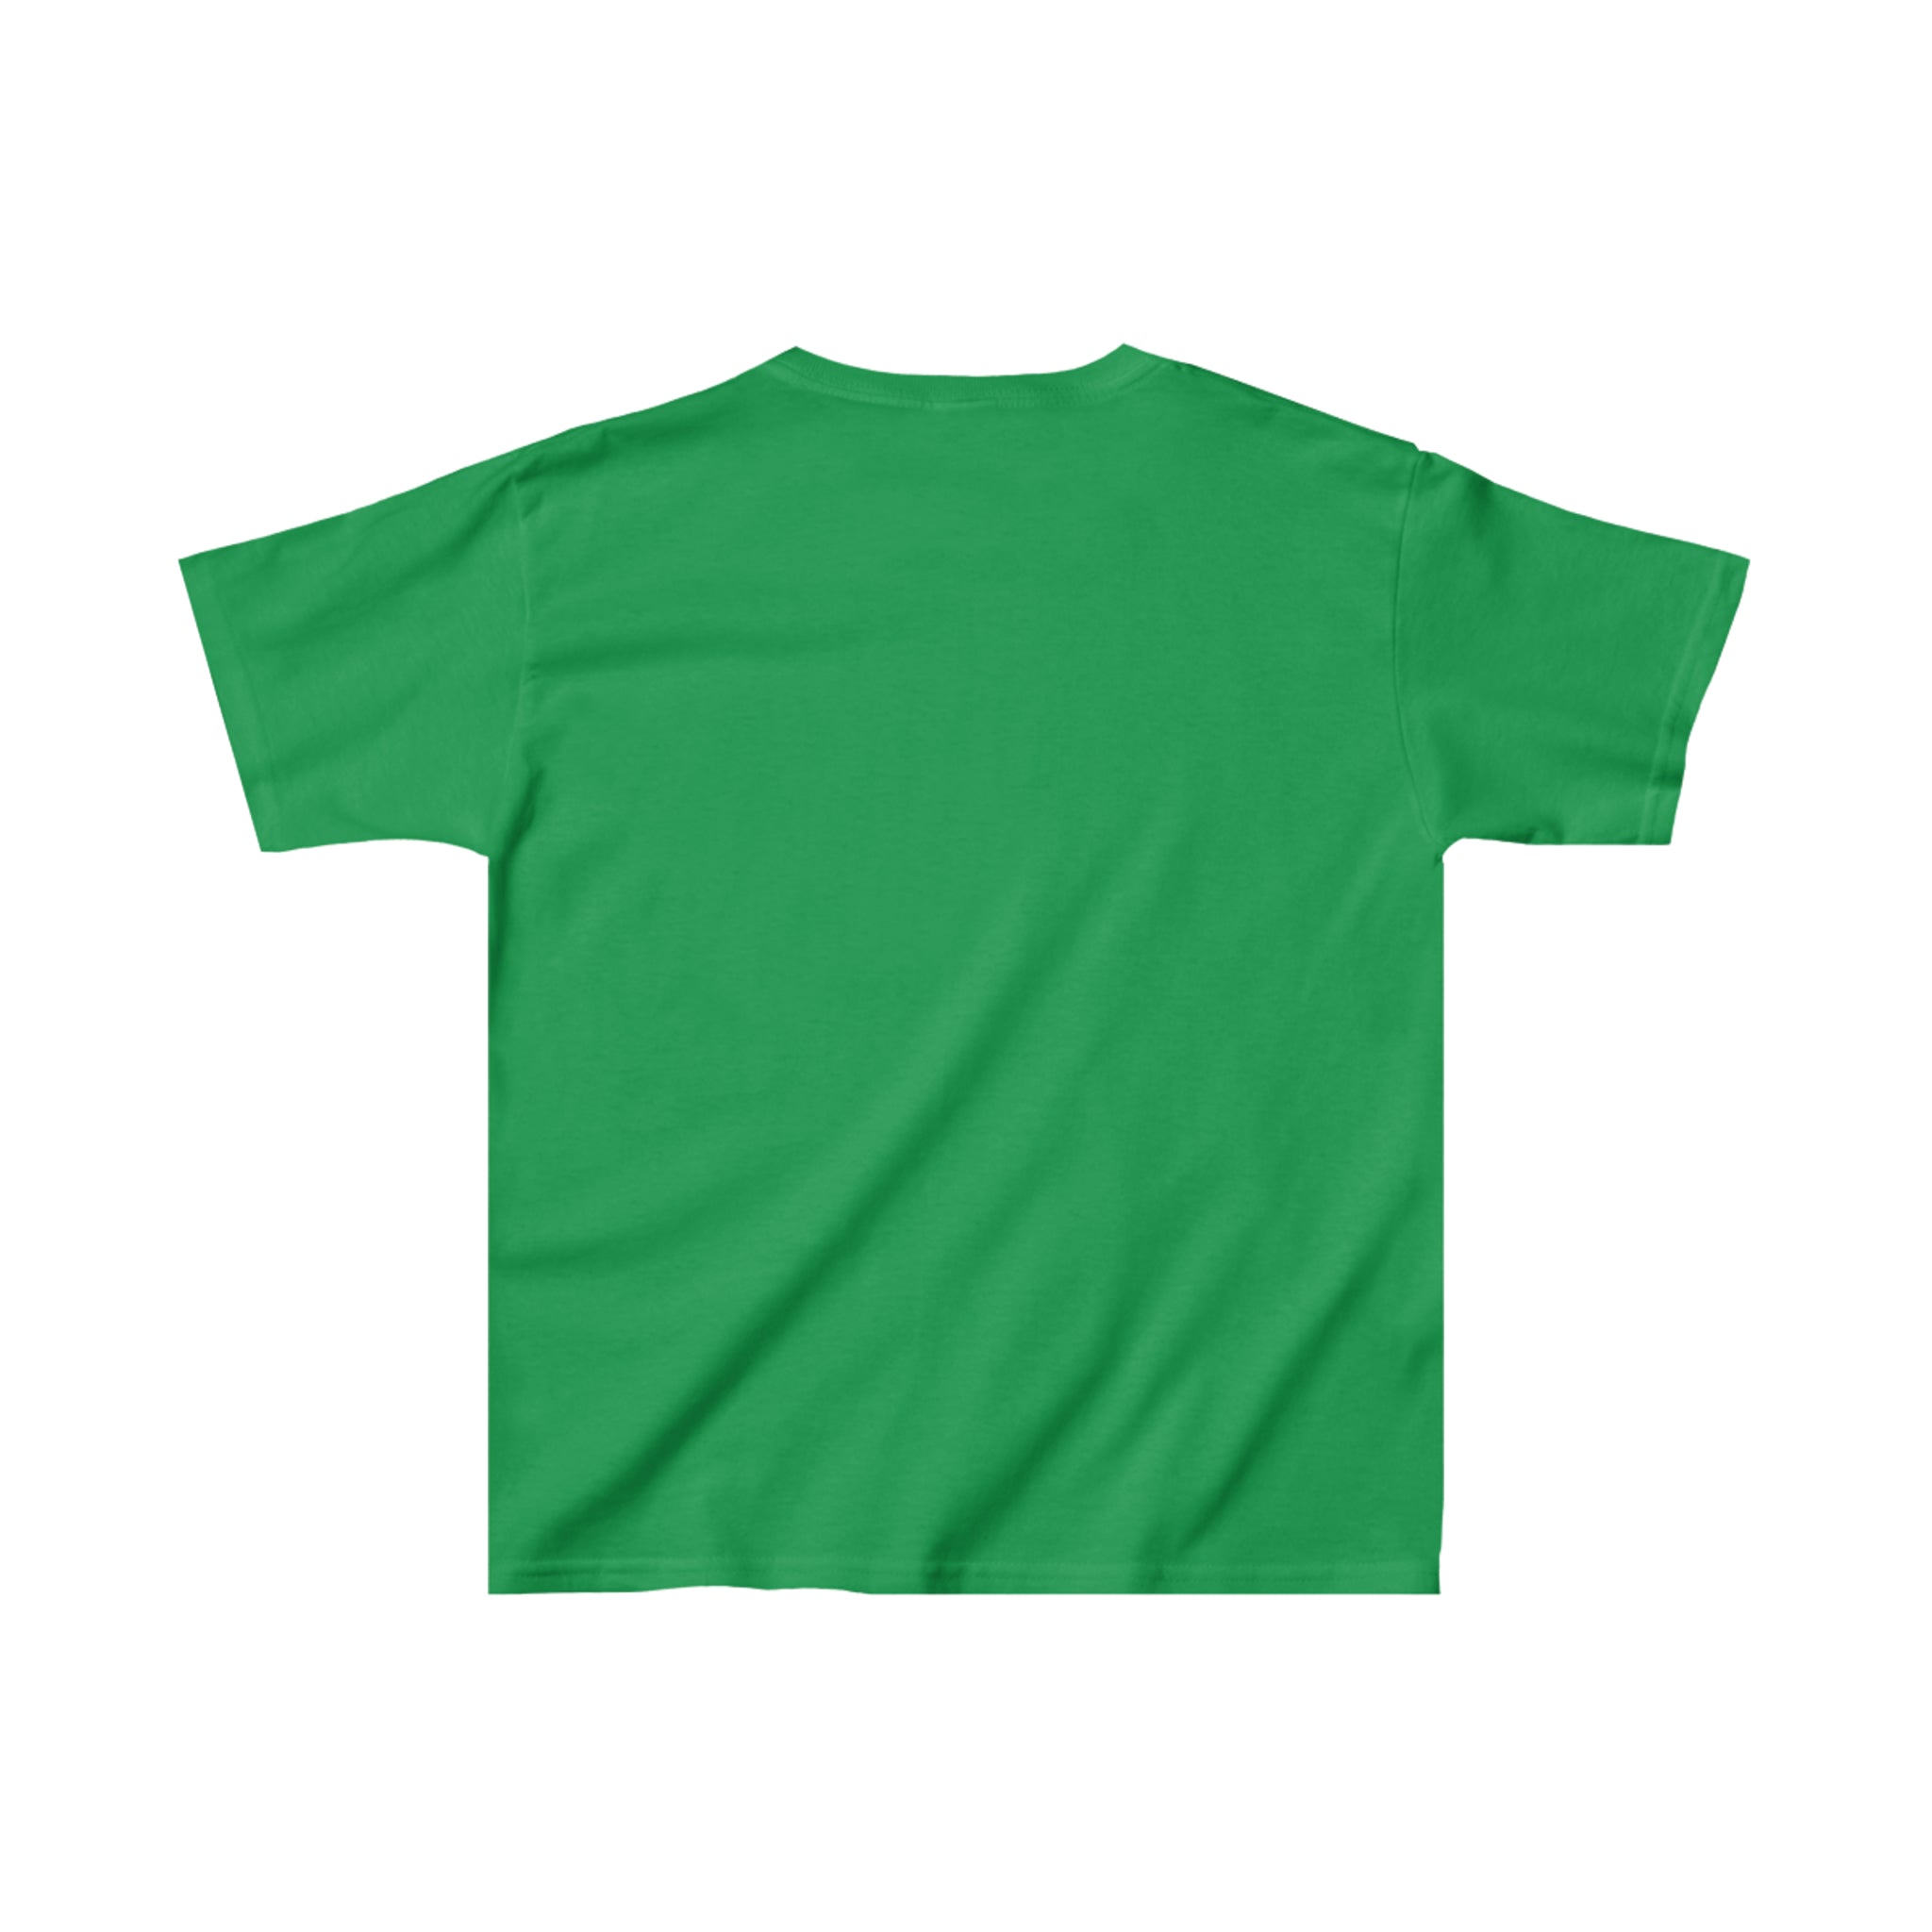 Greensboro Hockey Club T-Shirt (Youth)